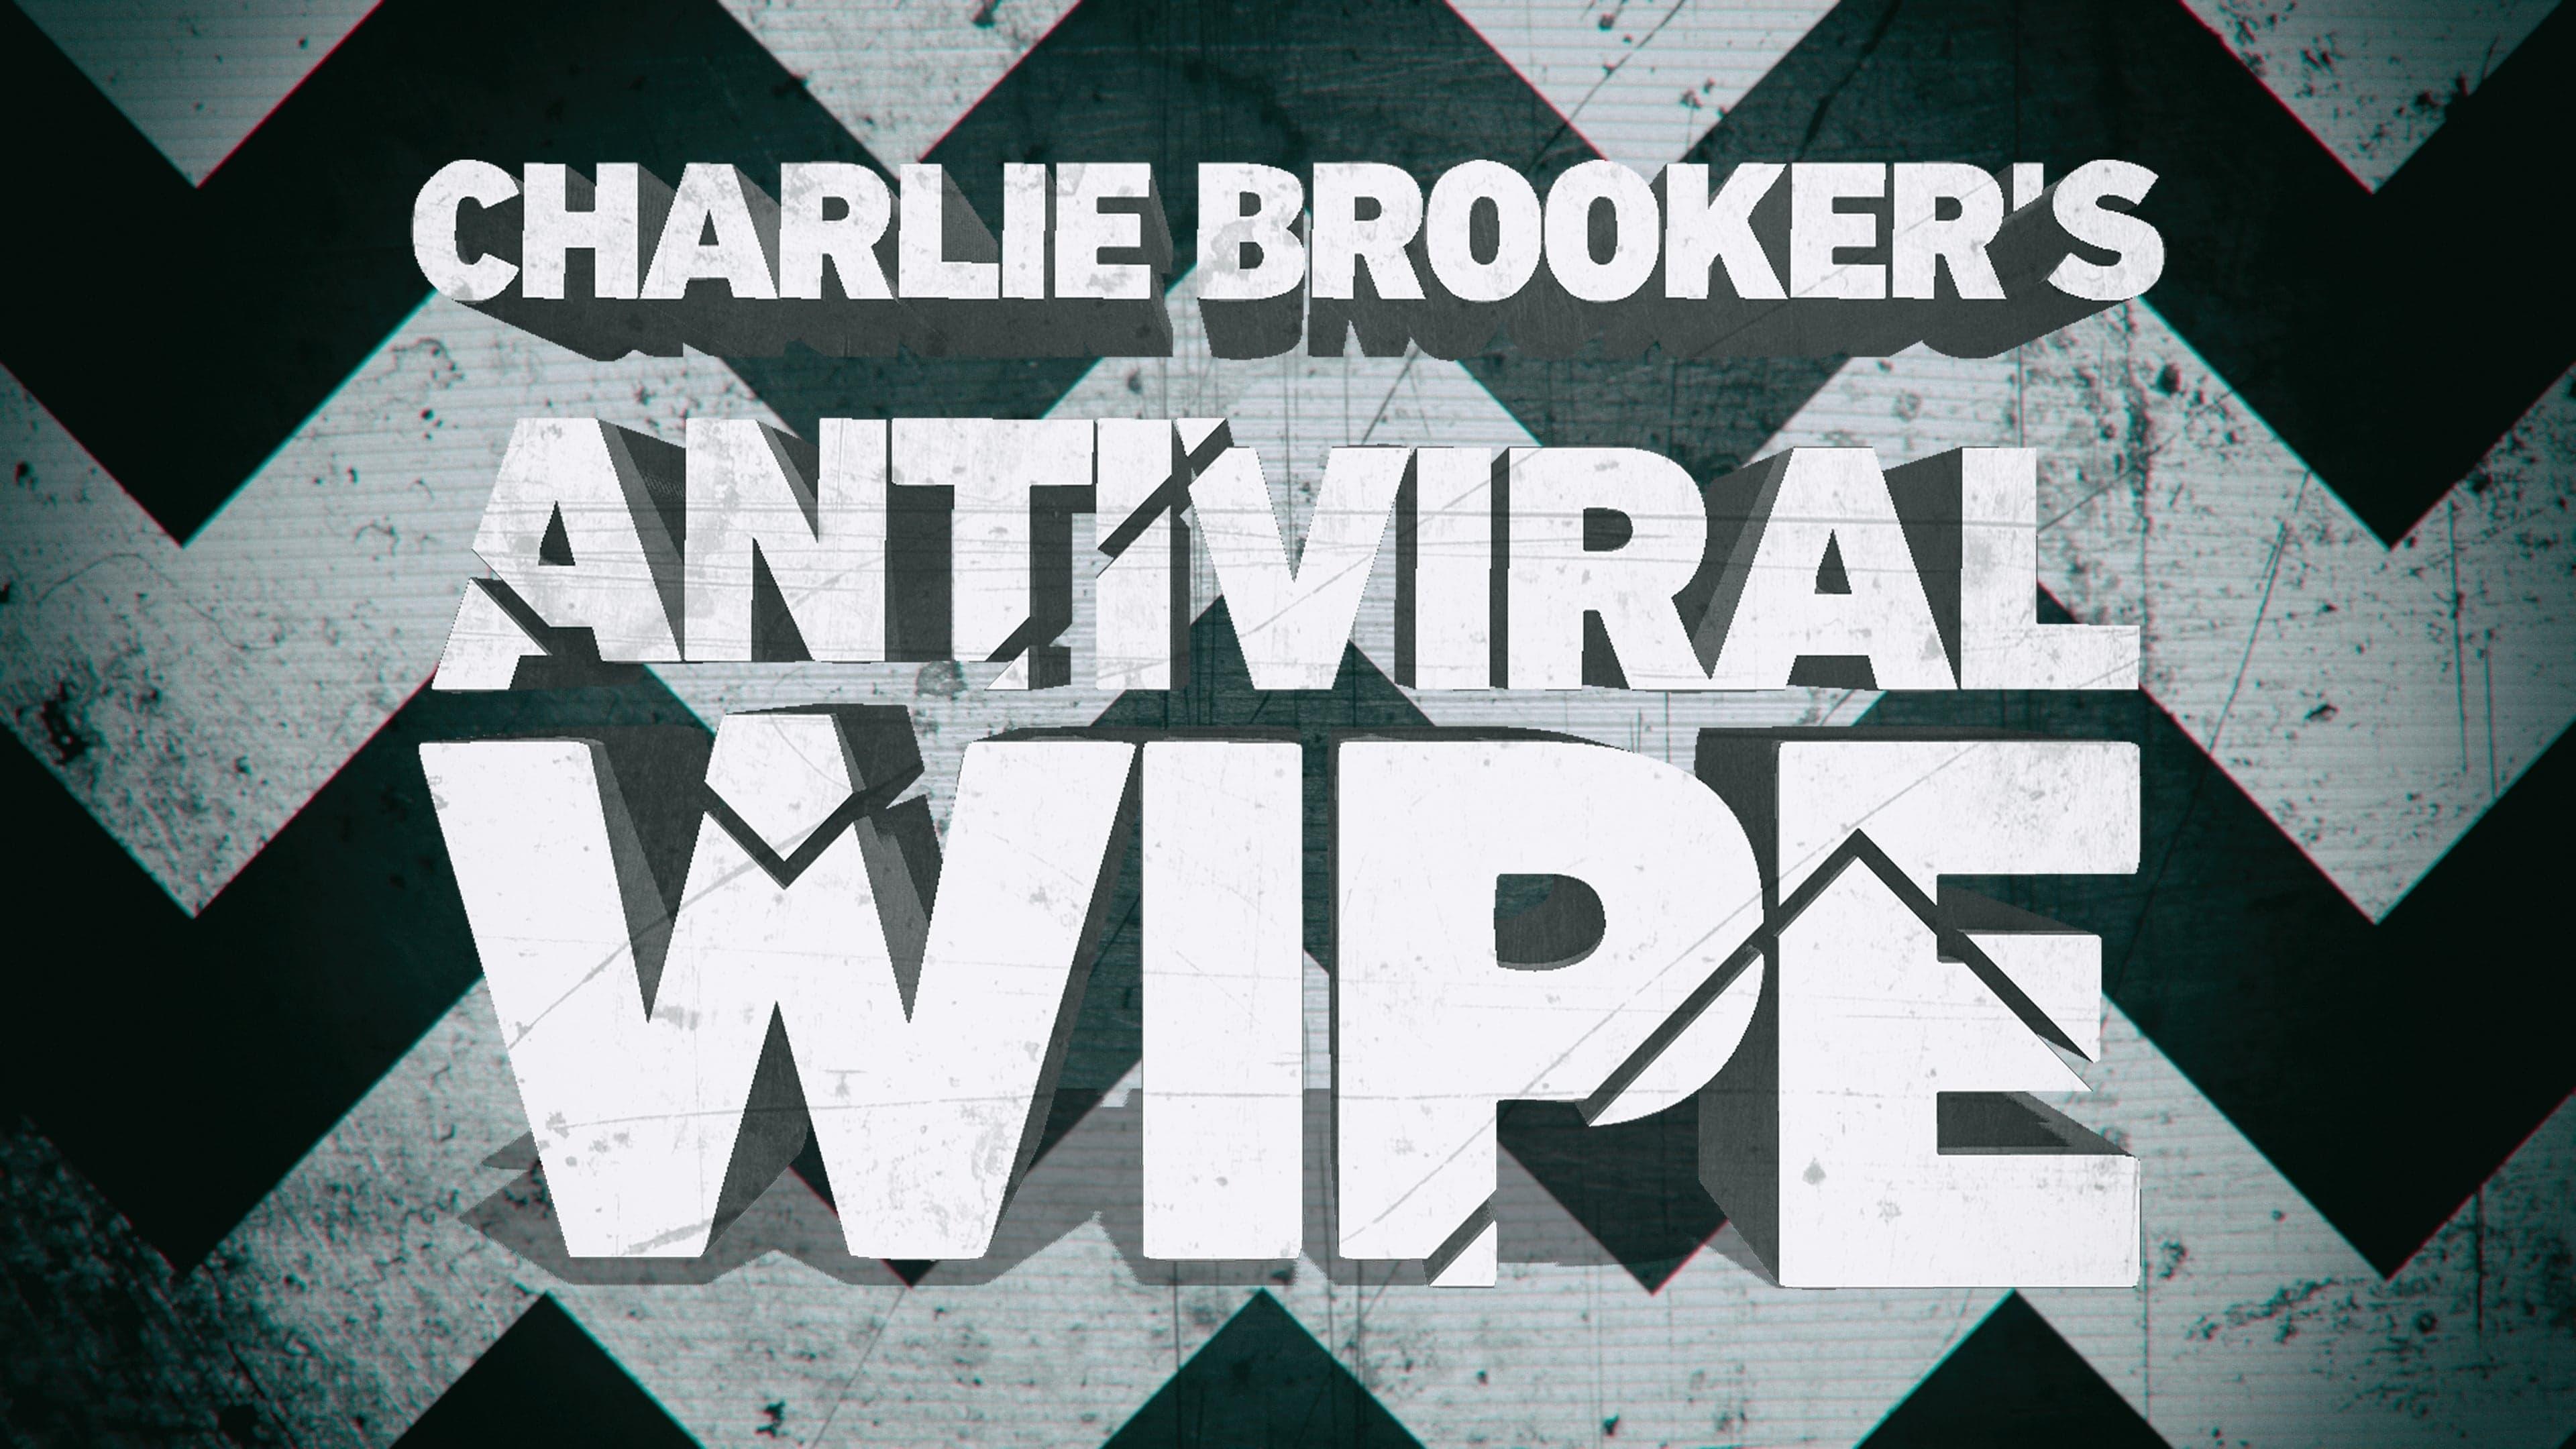 Charlie Brooker's Antiviral Wipe backdrop